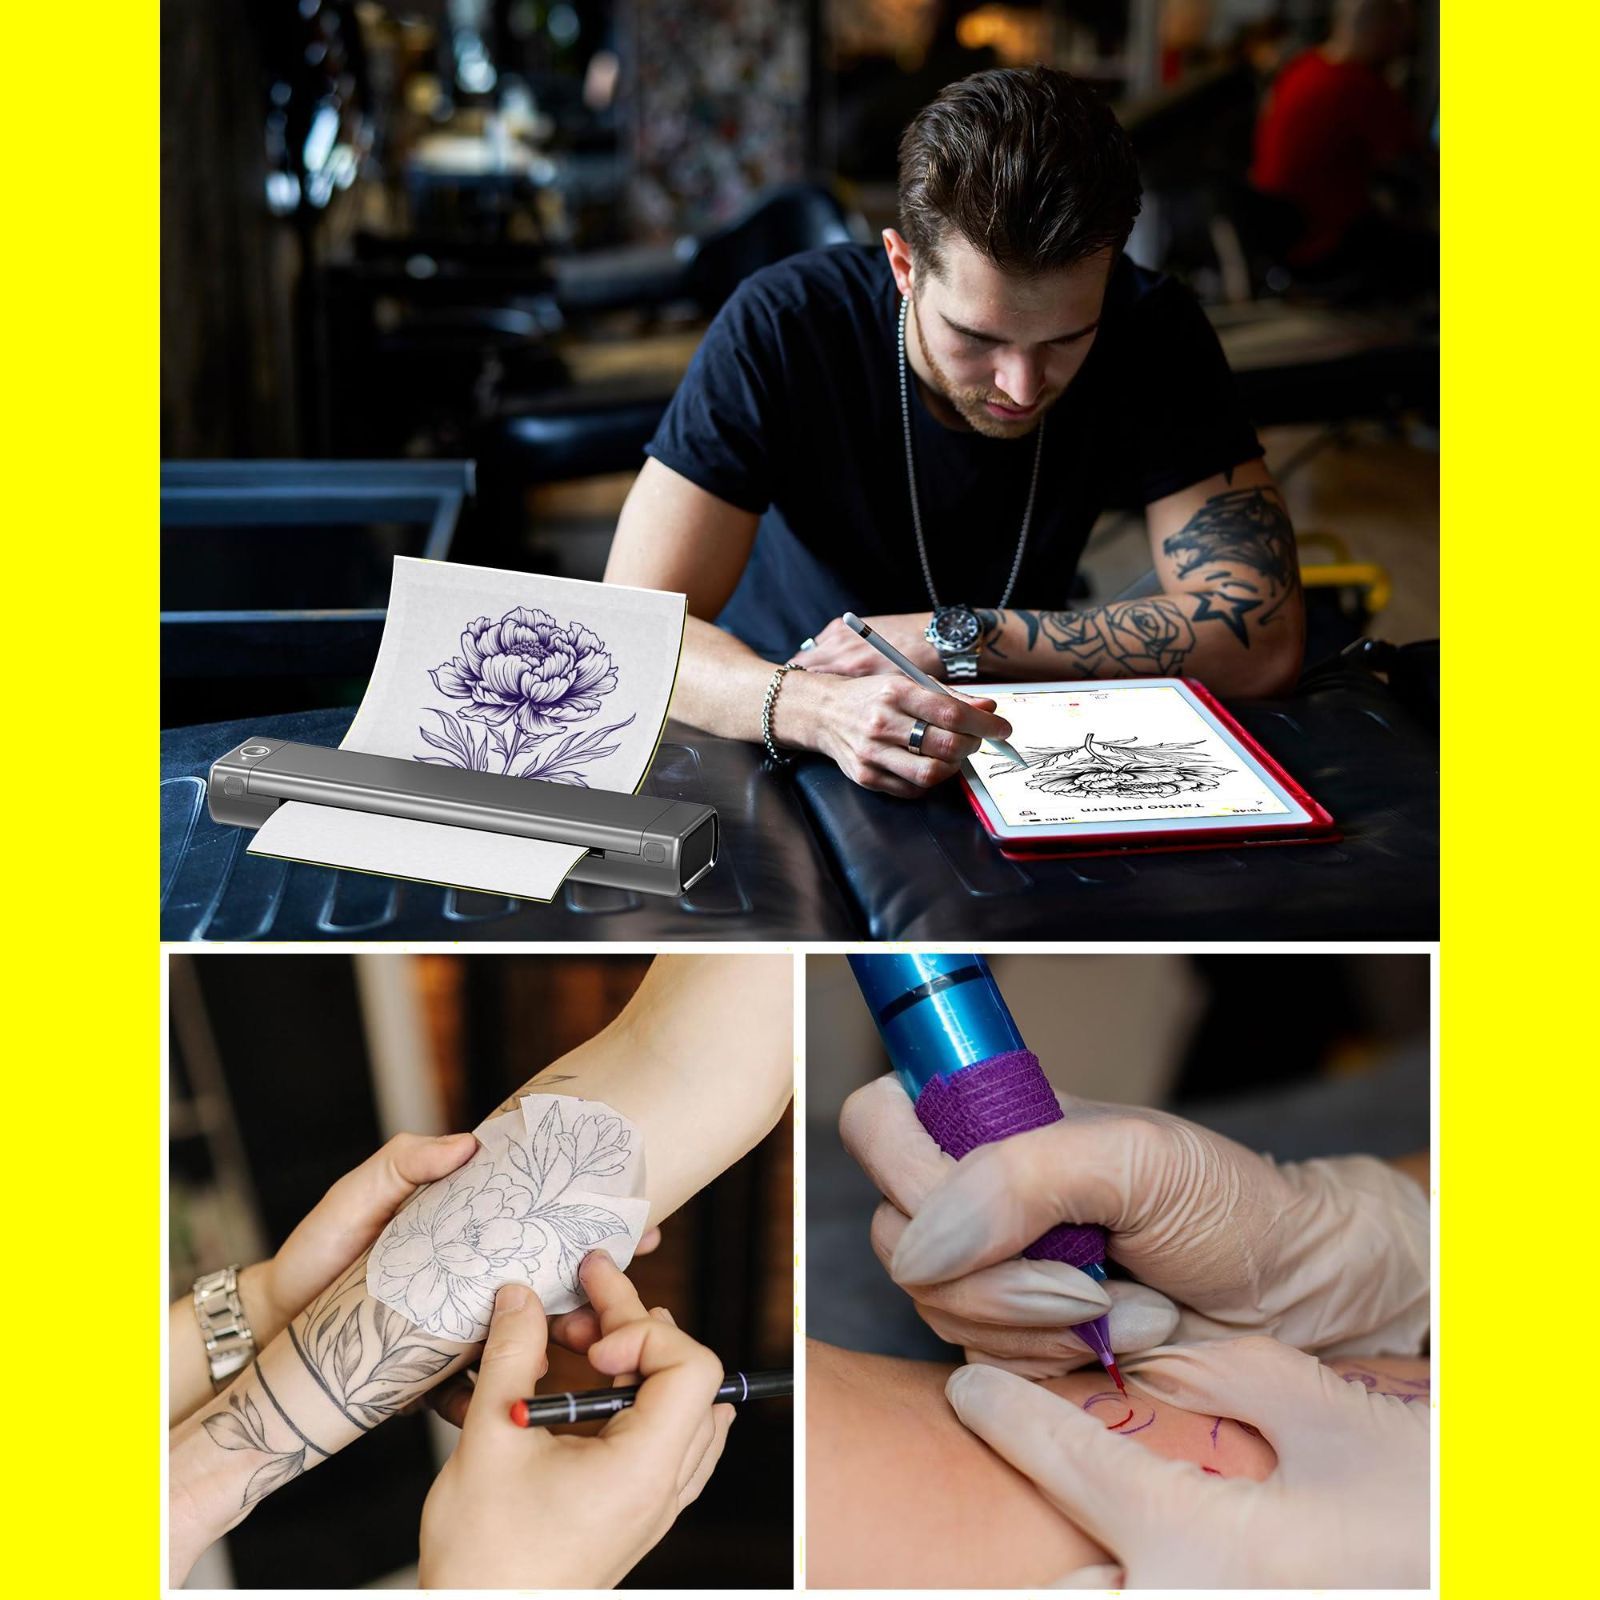 Itari M08F tattoo printer タトゥー用紙10枚付属 モバイルプリンター サーマルプリンタータトゥーマシン タトゥーマシーン  刺青コピー機 転写機 タトゥーマシーンセット タトゥーマシンセット タトゥーマシーンBluetooth接続対応